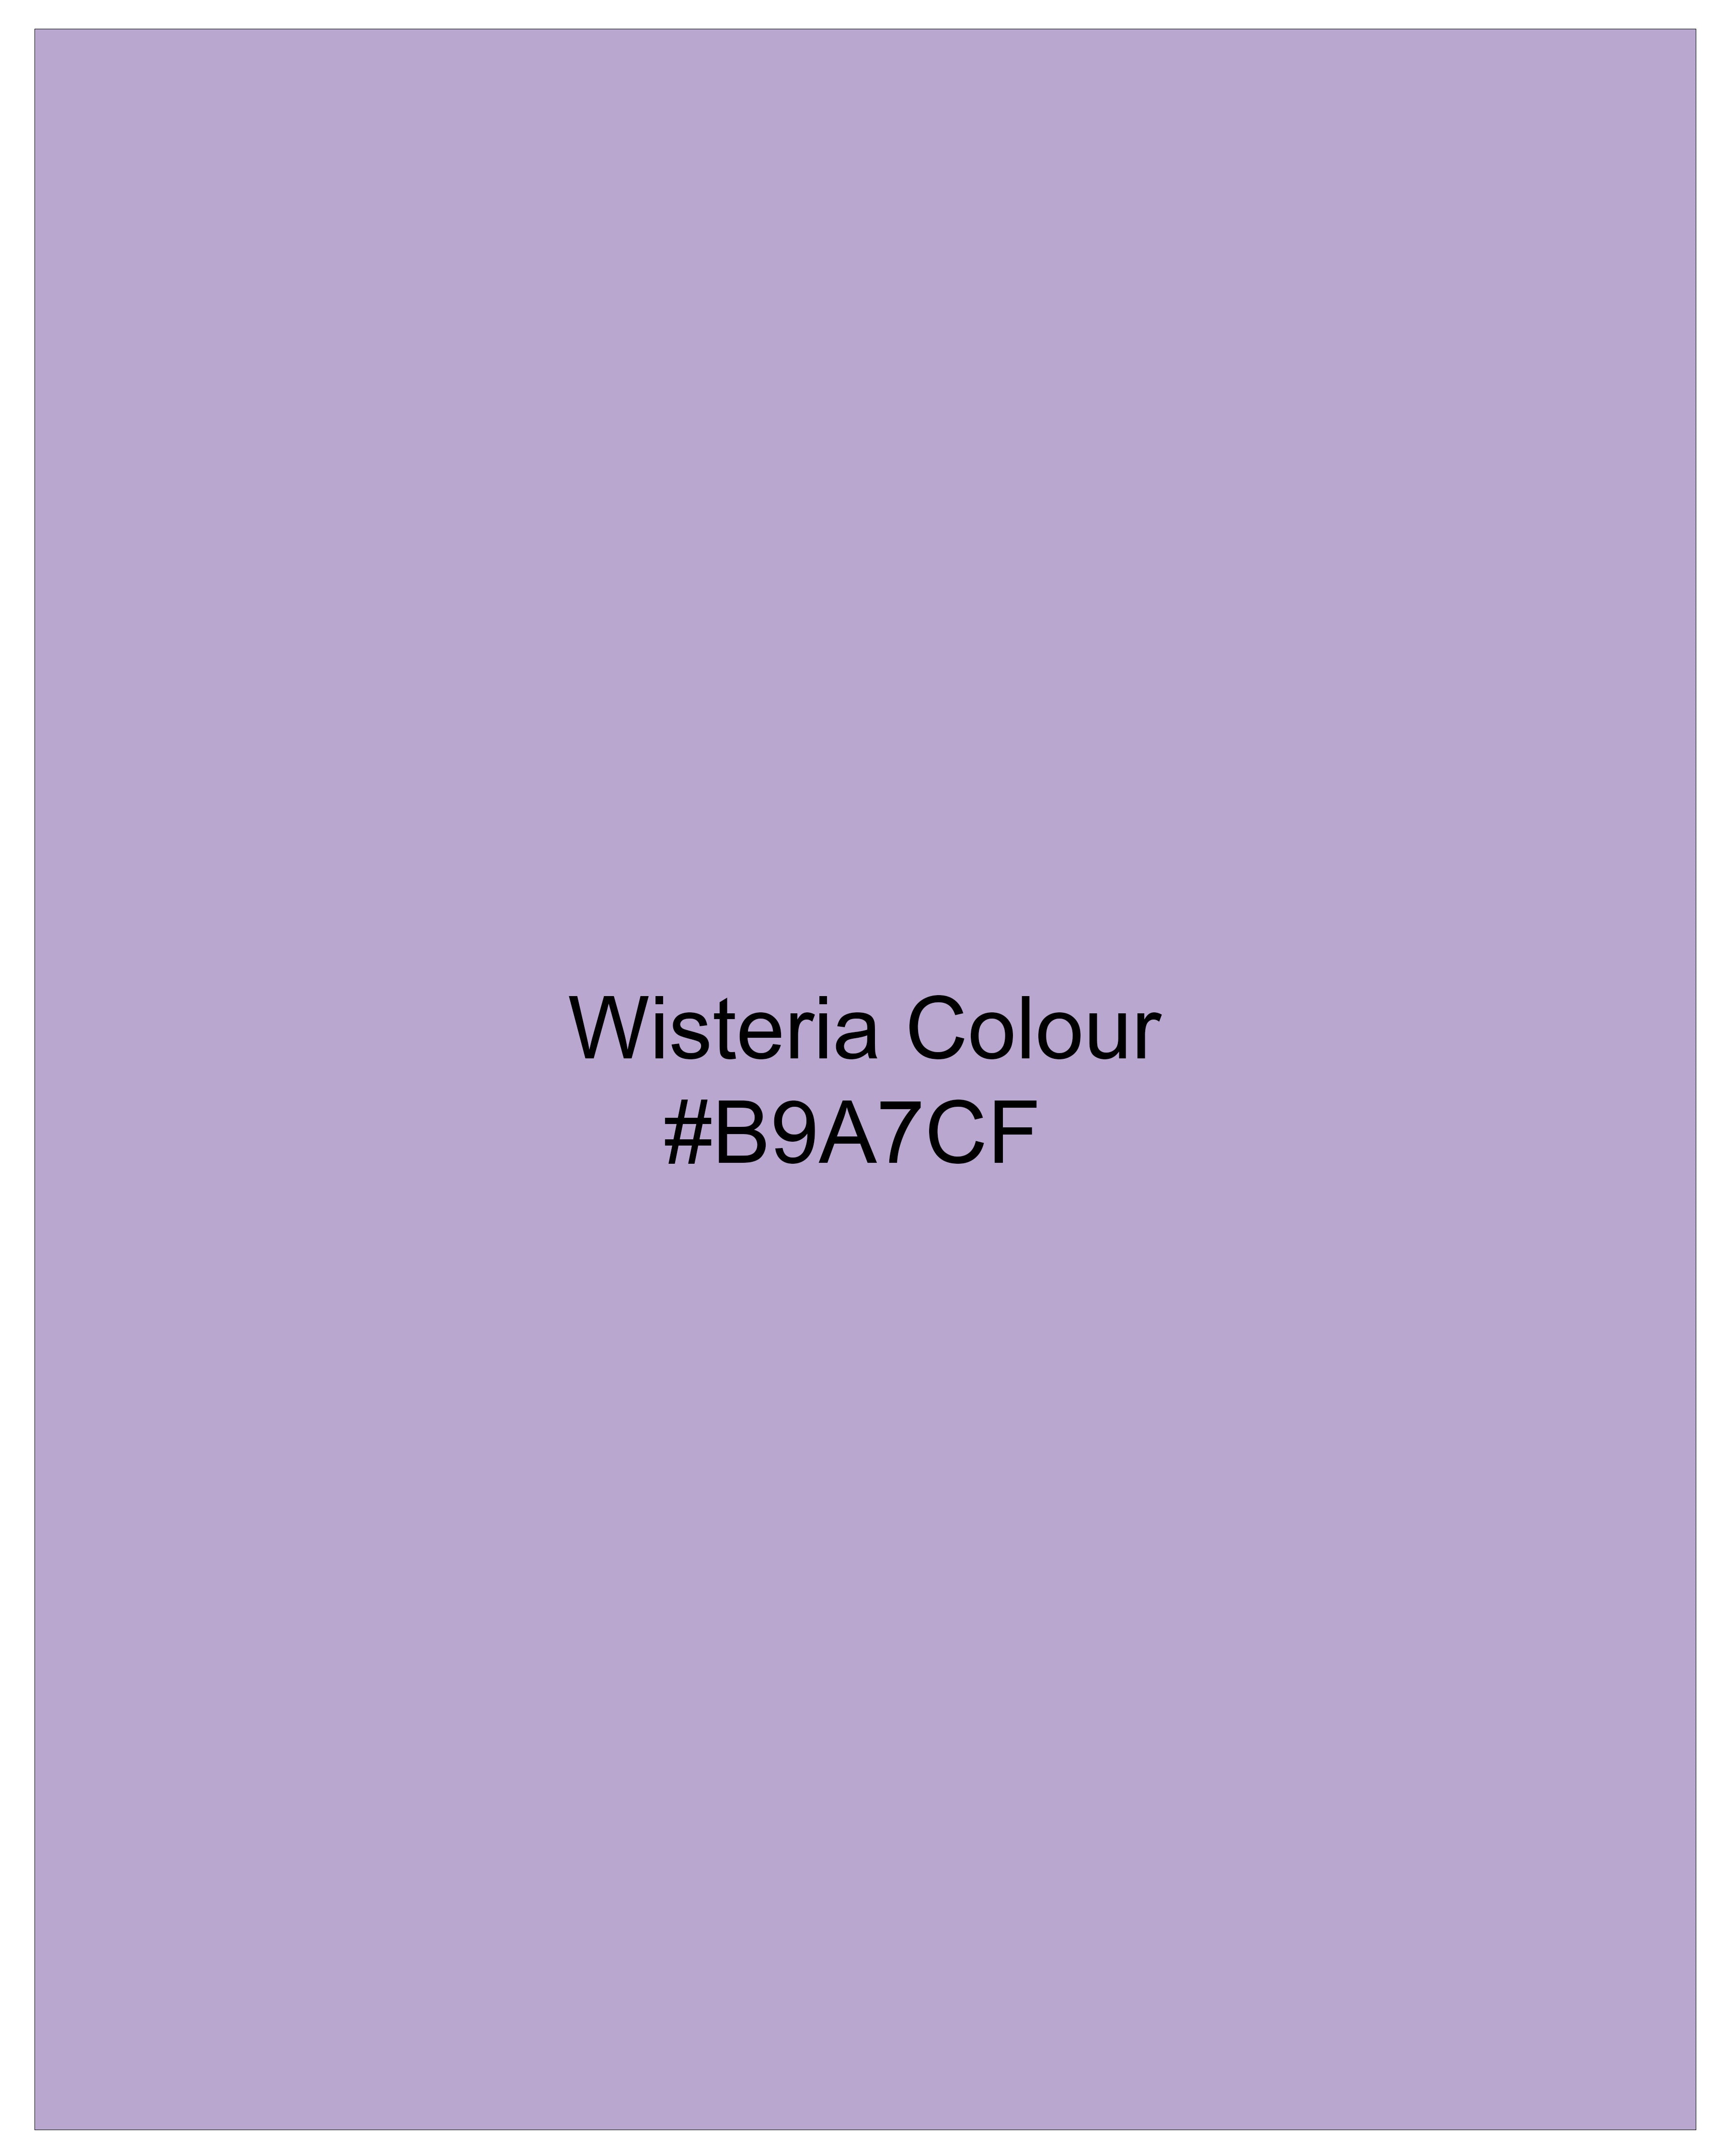 Wisteria Purple Royal Oxford Overshirt/Shacket 9951-BD-OS-38, 9951-BD-OS-H-38, 9951-BD-OS-39, 9951-BD-OS-H-39, 9951-BD-OS-40, 9951-BD-OS-H-40, 9951-BD-OS-42, 9951-BD-OS-H-42, 9951-BD-OS-44, 9951-BD-OS-H-44, 9951-BD-OS-46, 9951-BD-OS-H-46, 9951-BD-OS-48, 9951-BD-OS-H-48, 9951-BD-OS-50, 9951-BD-OS-H-50, 9951-BD-OS-52, 9951-BD-OS-H-52